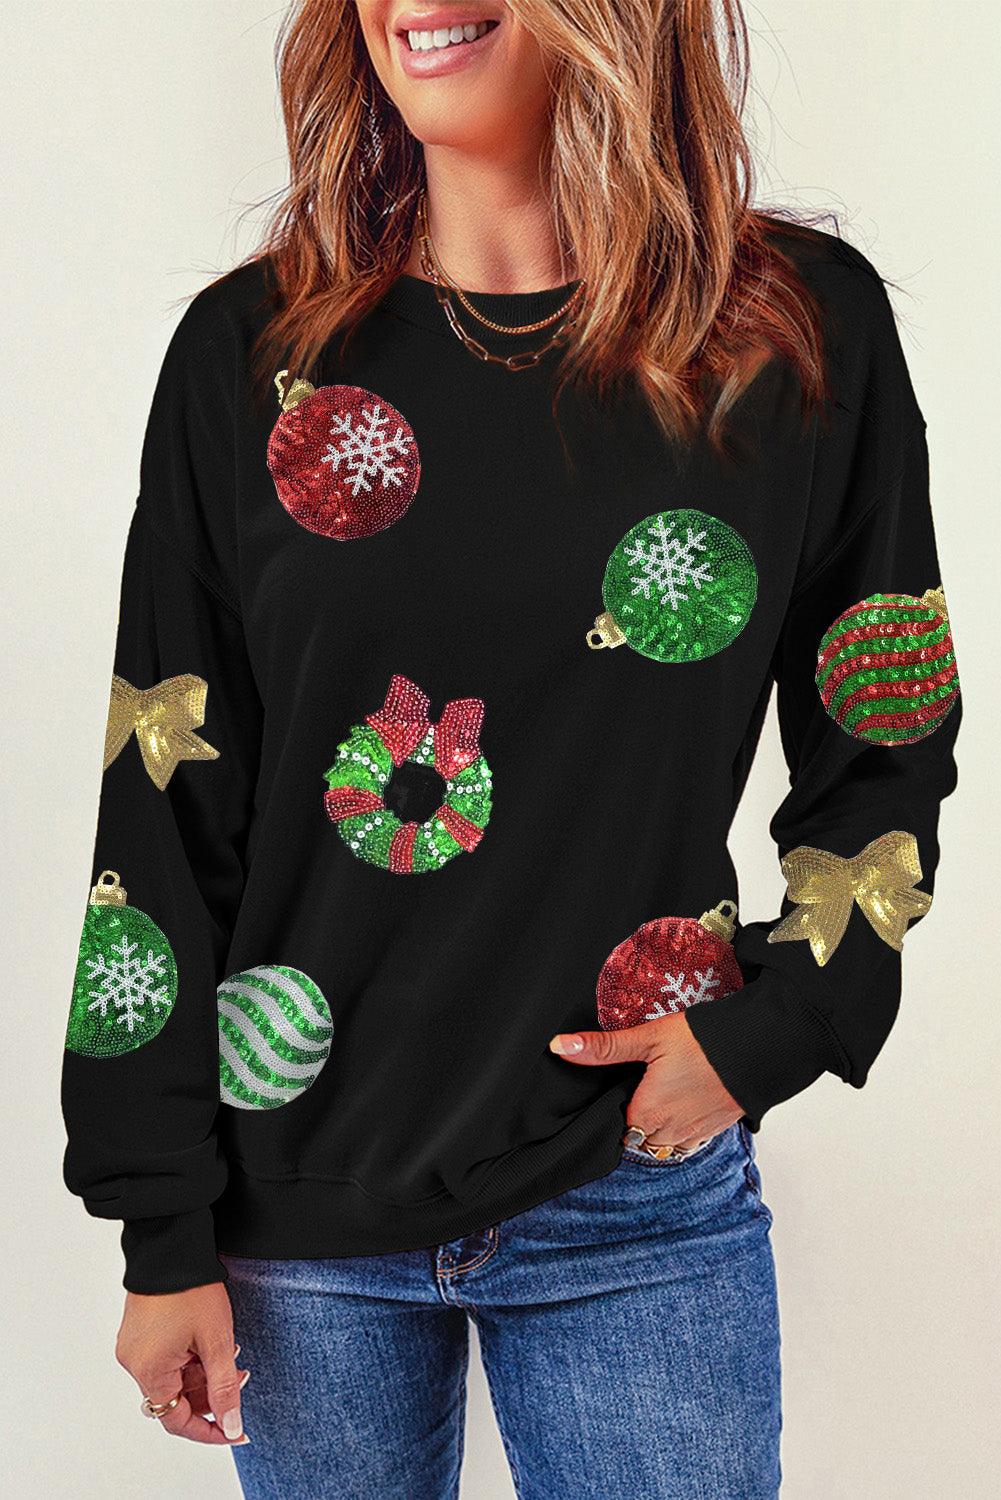 Black Sequined Christmas Graphic Pullover Sweatshirt - L & M Kee, LLC